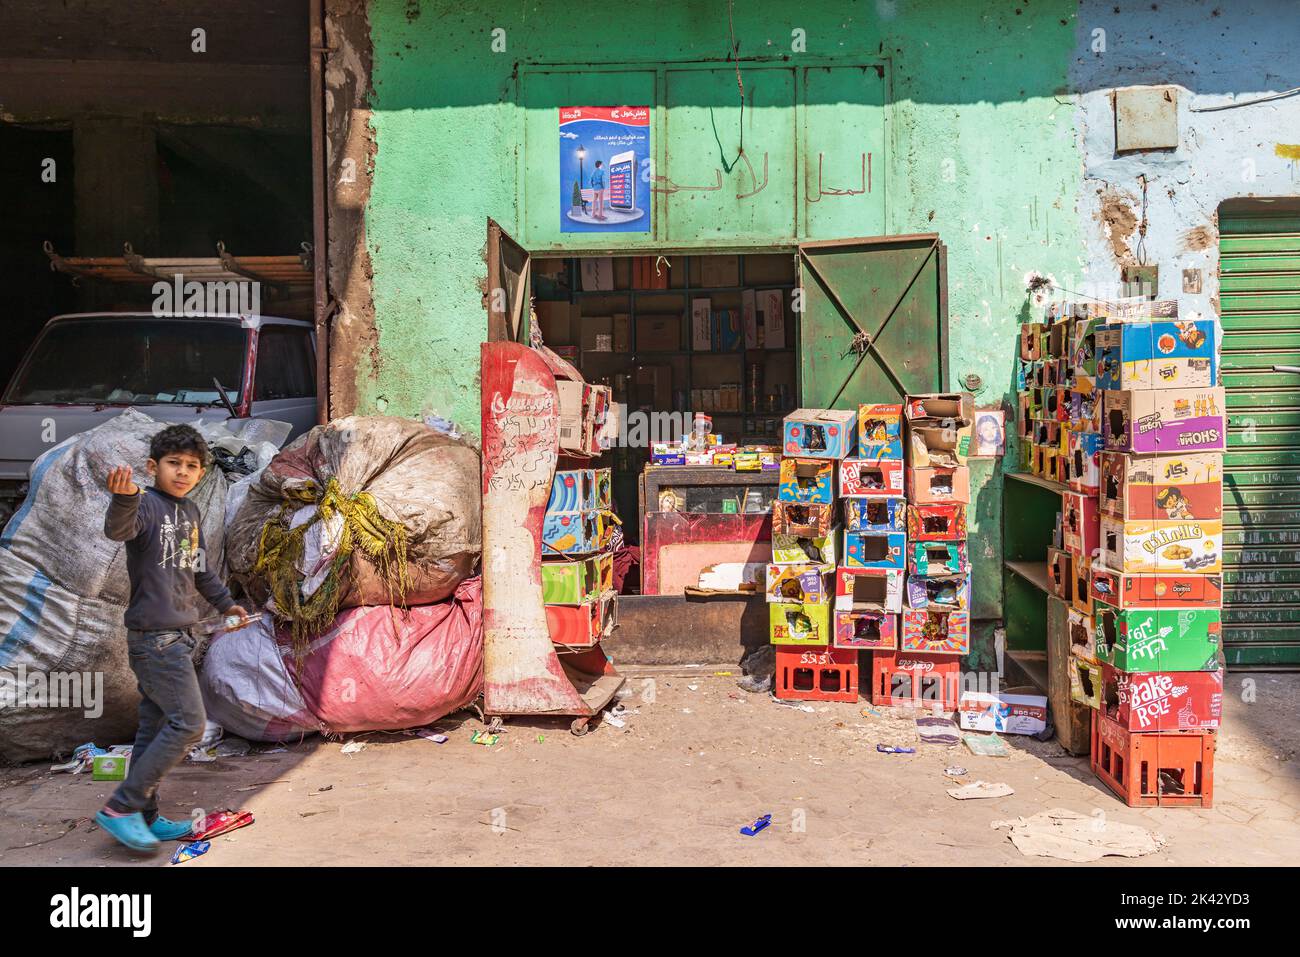 Manshiyat Naser, Garbage City, Cairo, Egypt. February 14, 2022. A small snack shop in Manshiyat Naser, Garbage City, Cairo. Stock Photo